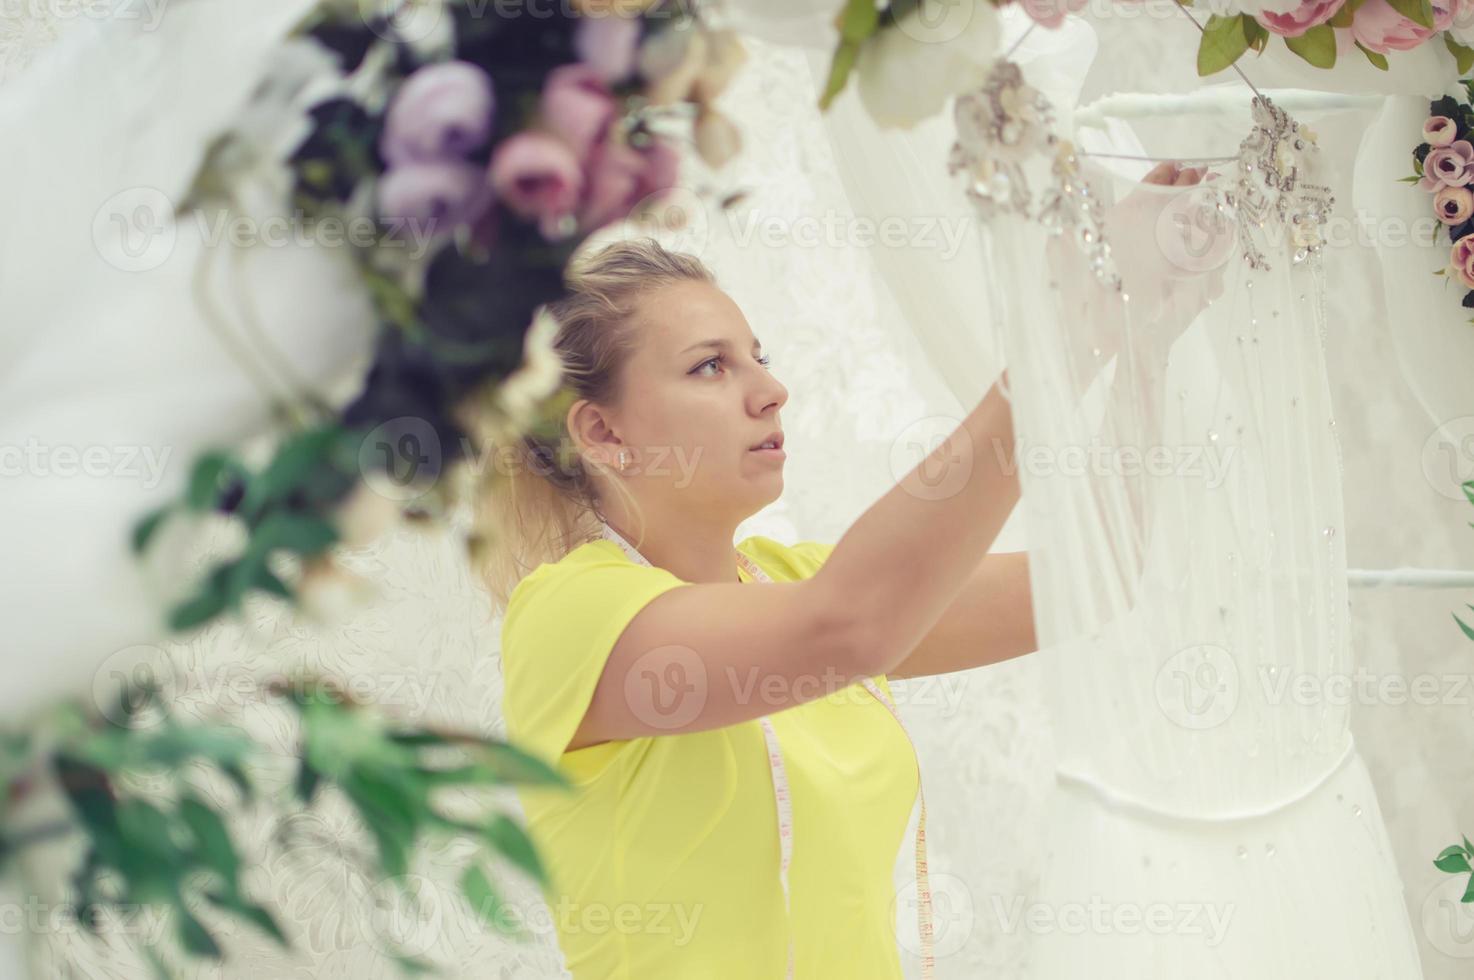 a seamstress in a wedding salon is preparing a dress for sale. Garden arch wedding dress photo